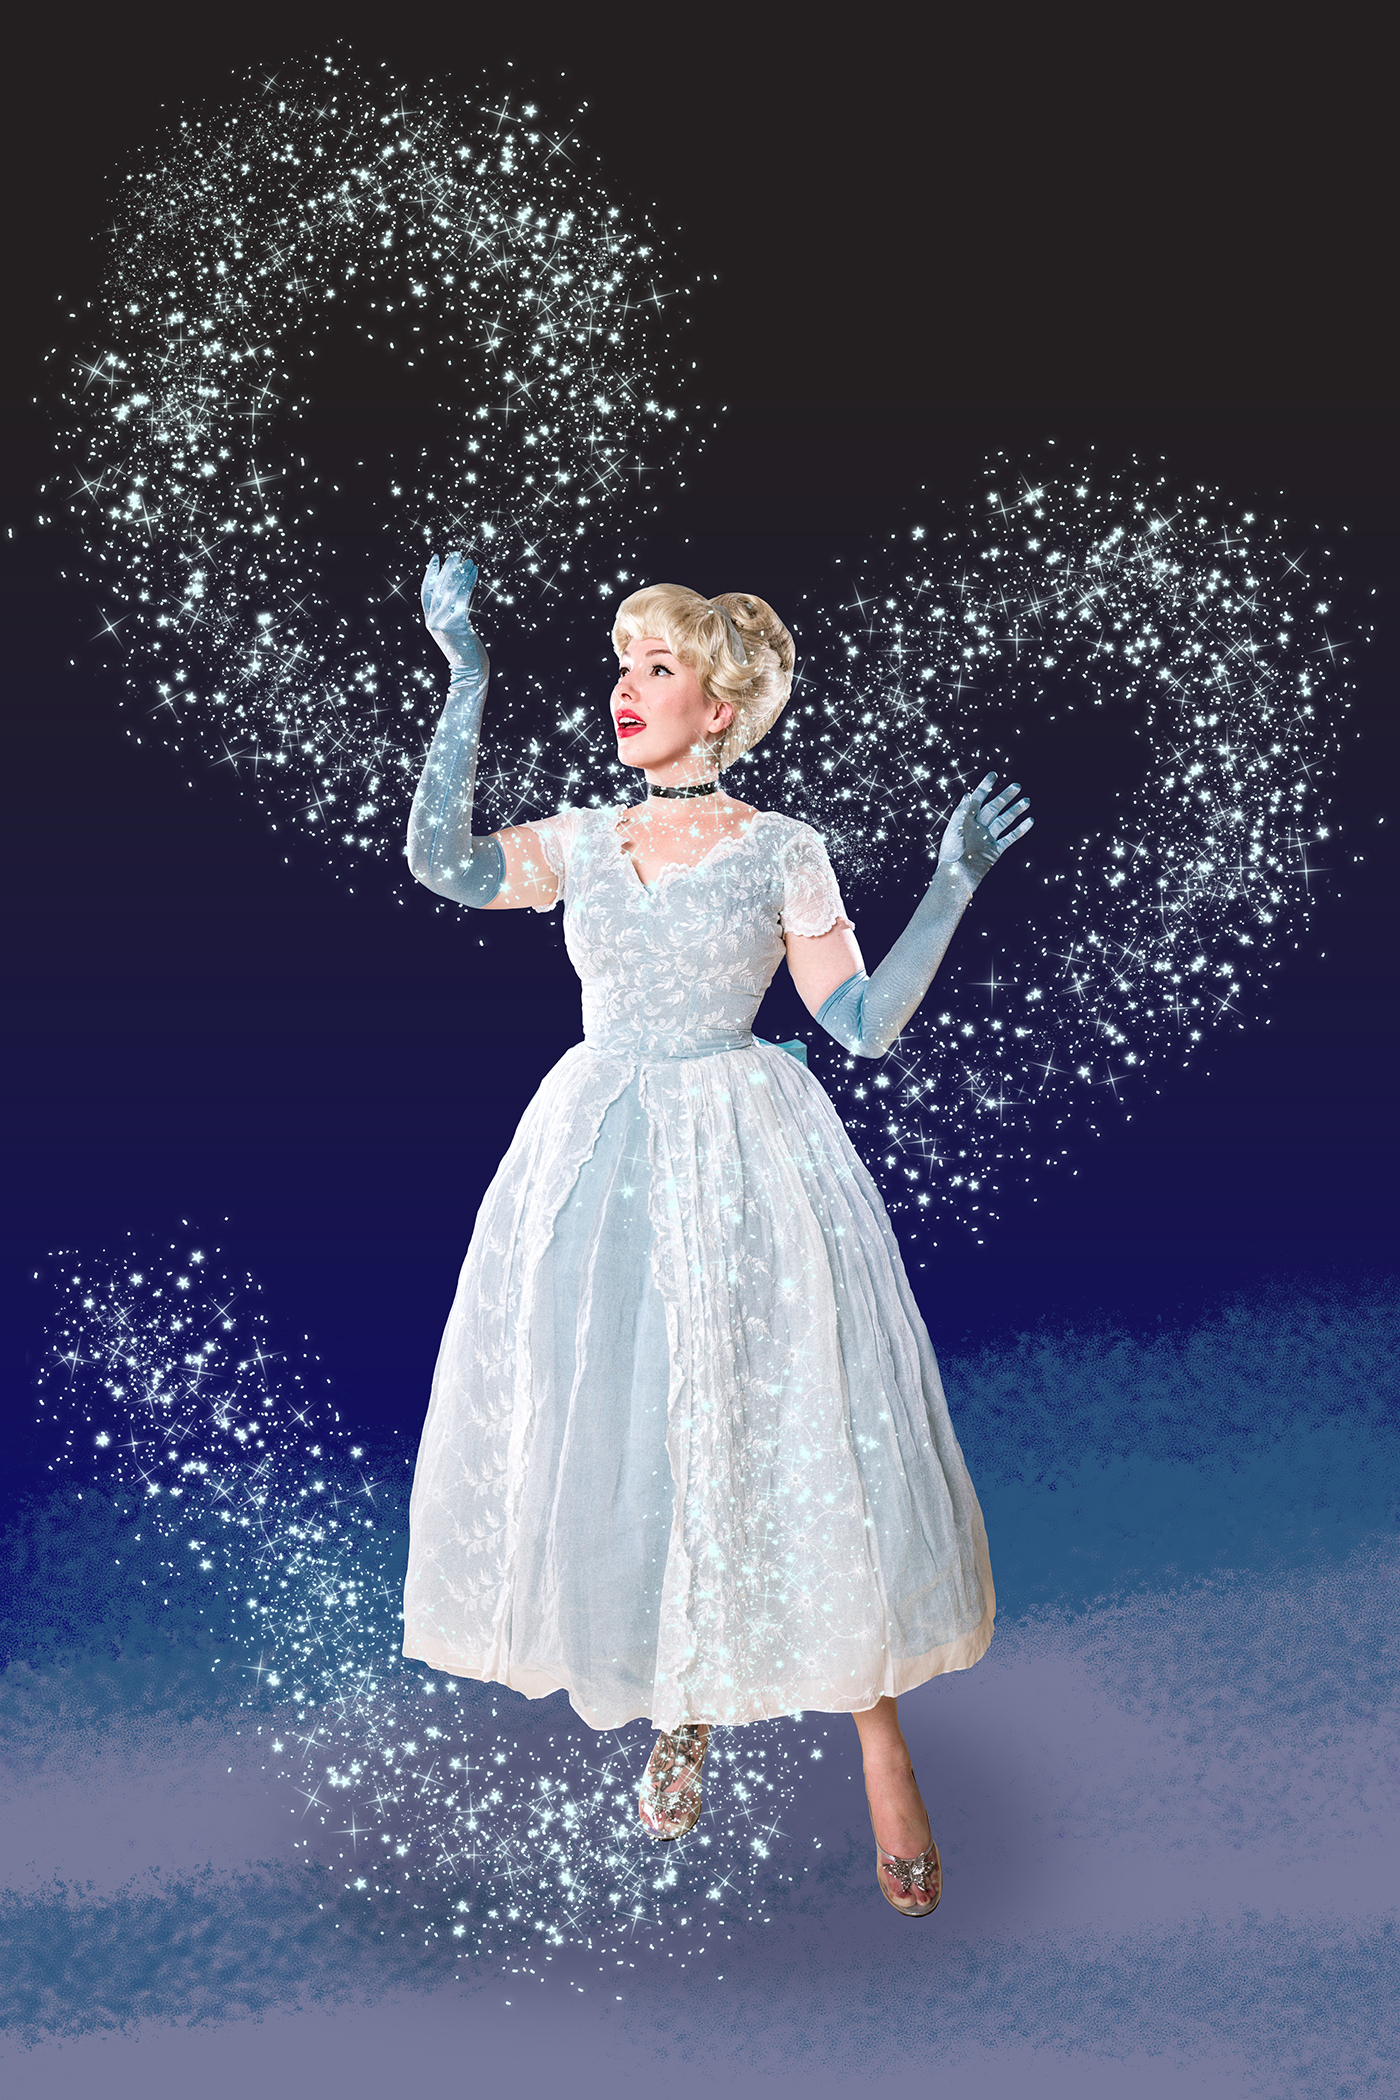 Disney Halloween Costume: Cinderella, keiko lynn